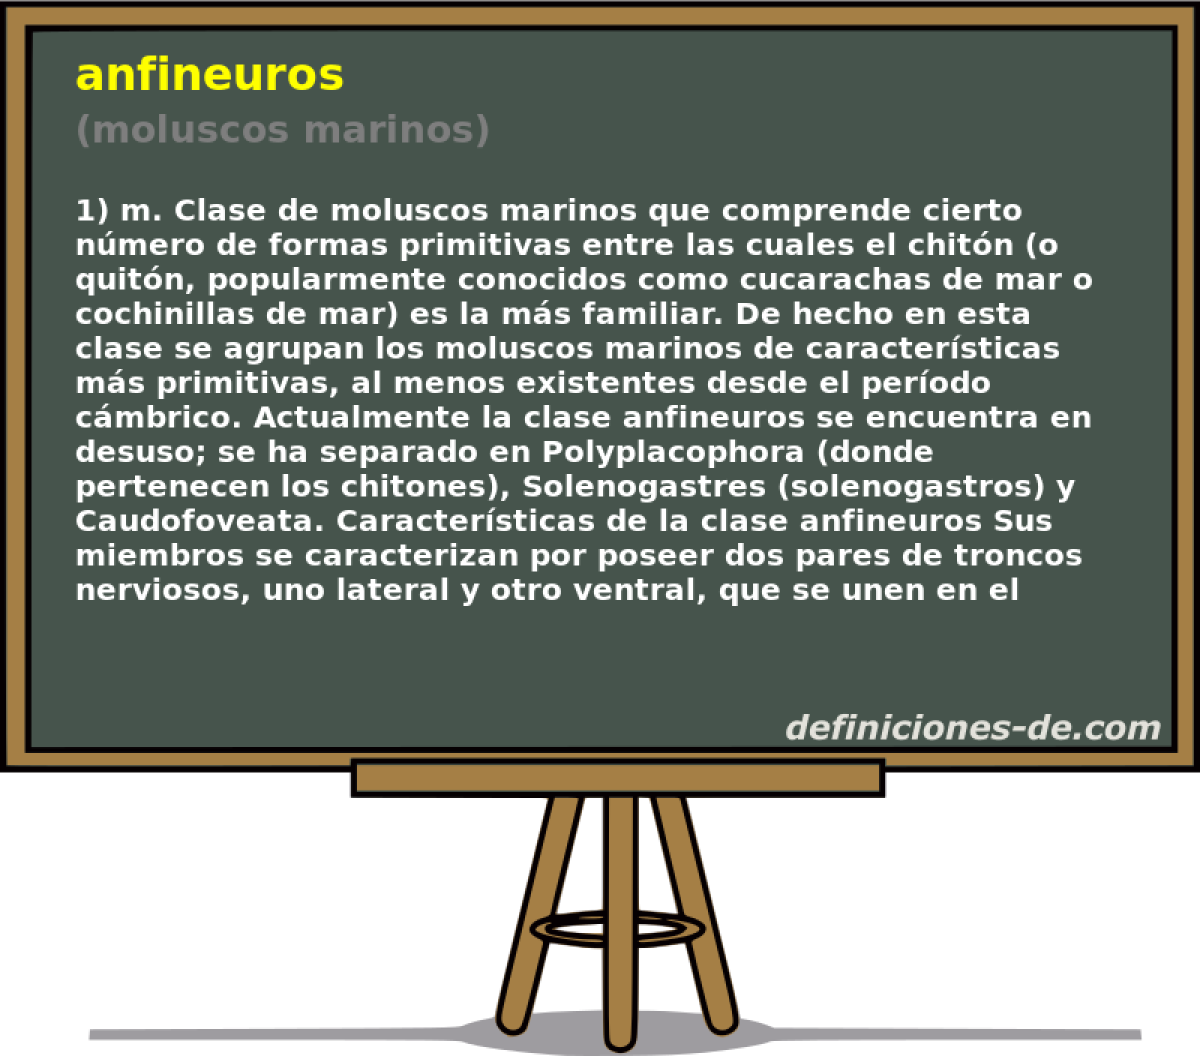 anfineuros (moluscos marinos)